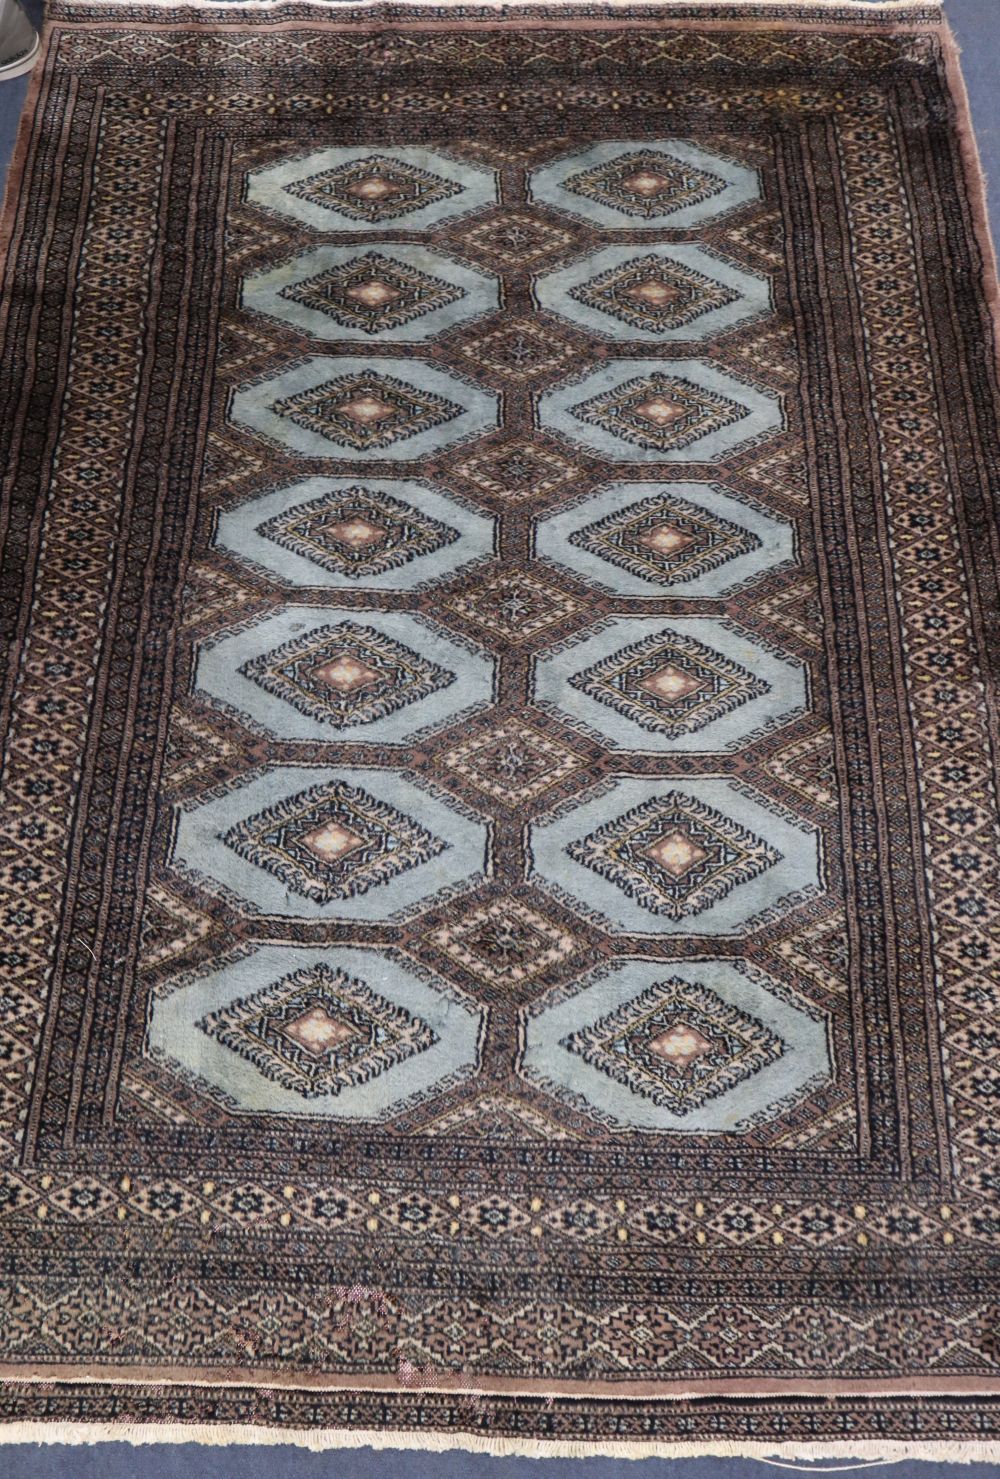 A Bokhara blue ground rug, 180 x 130cm